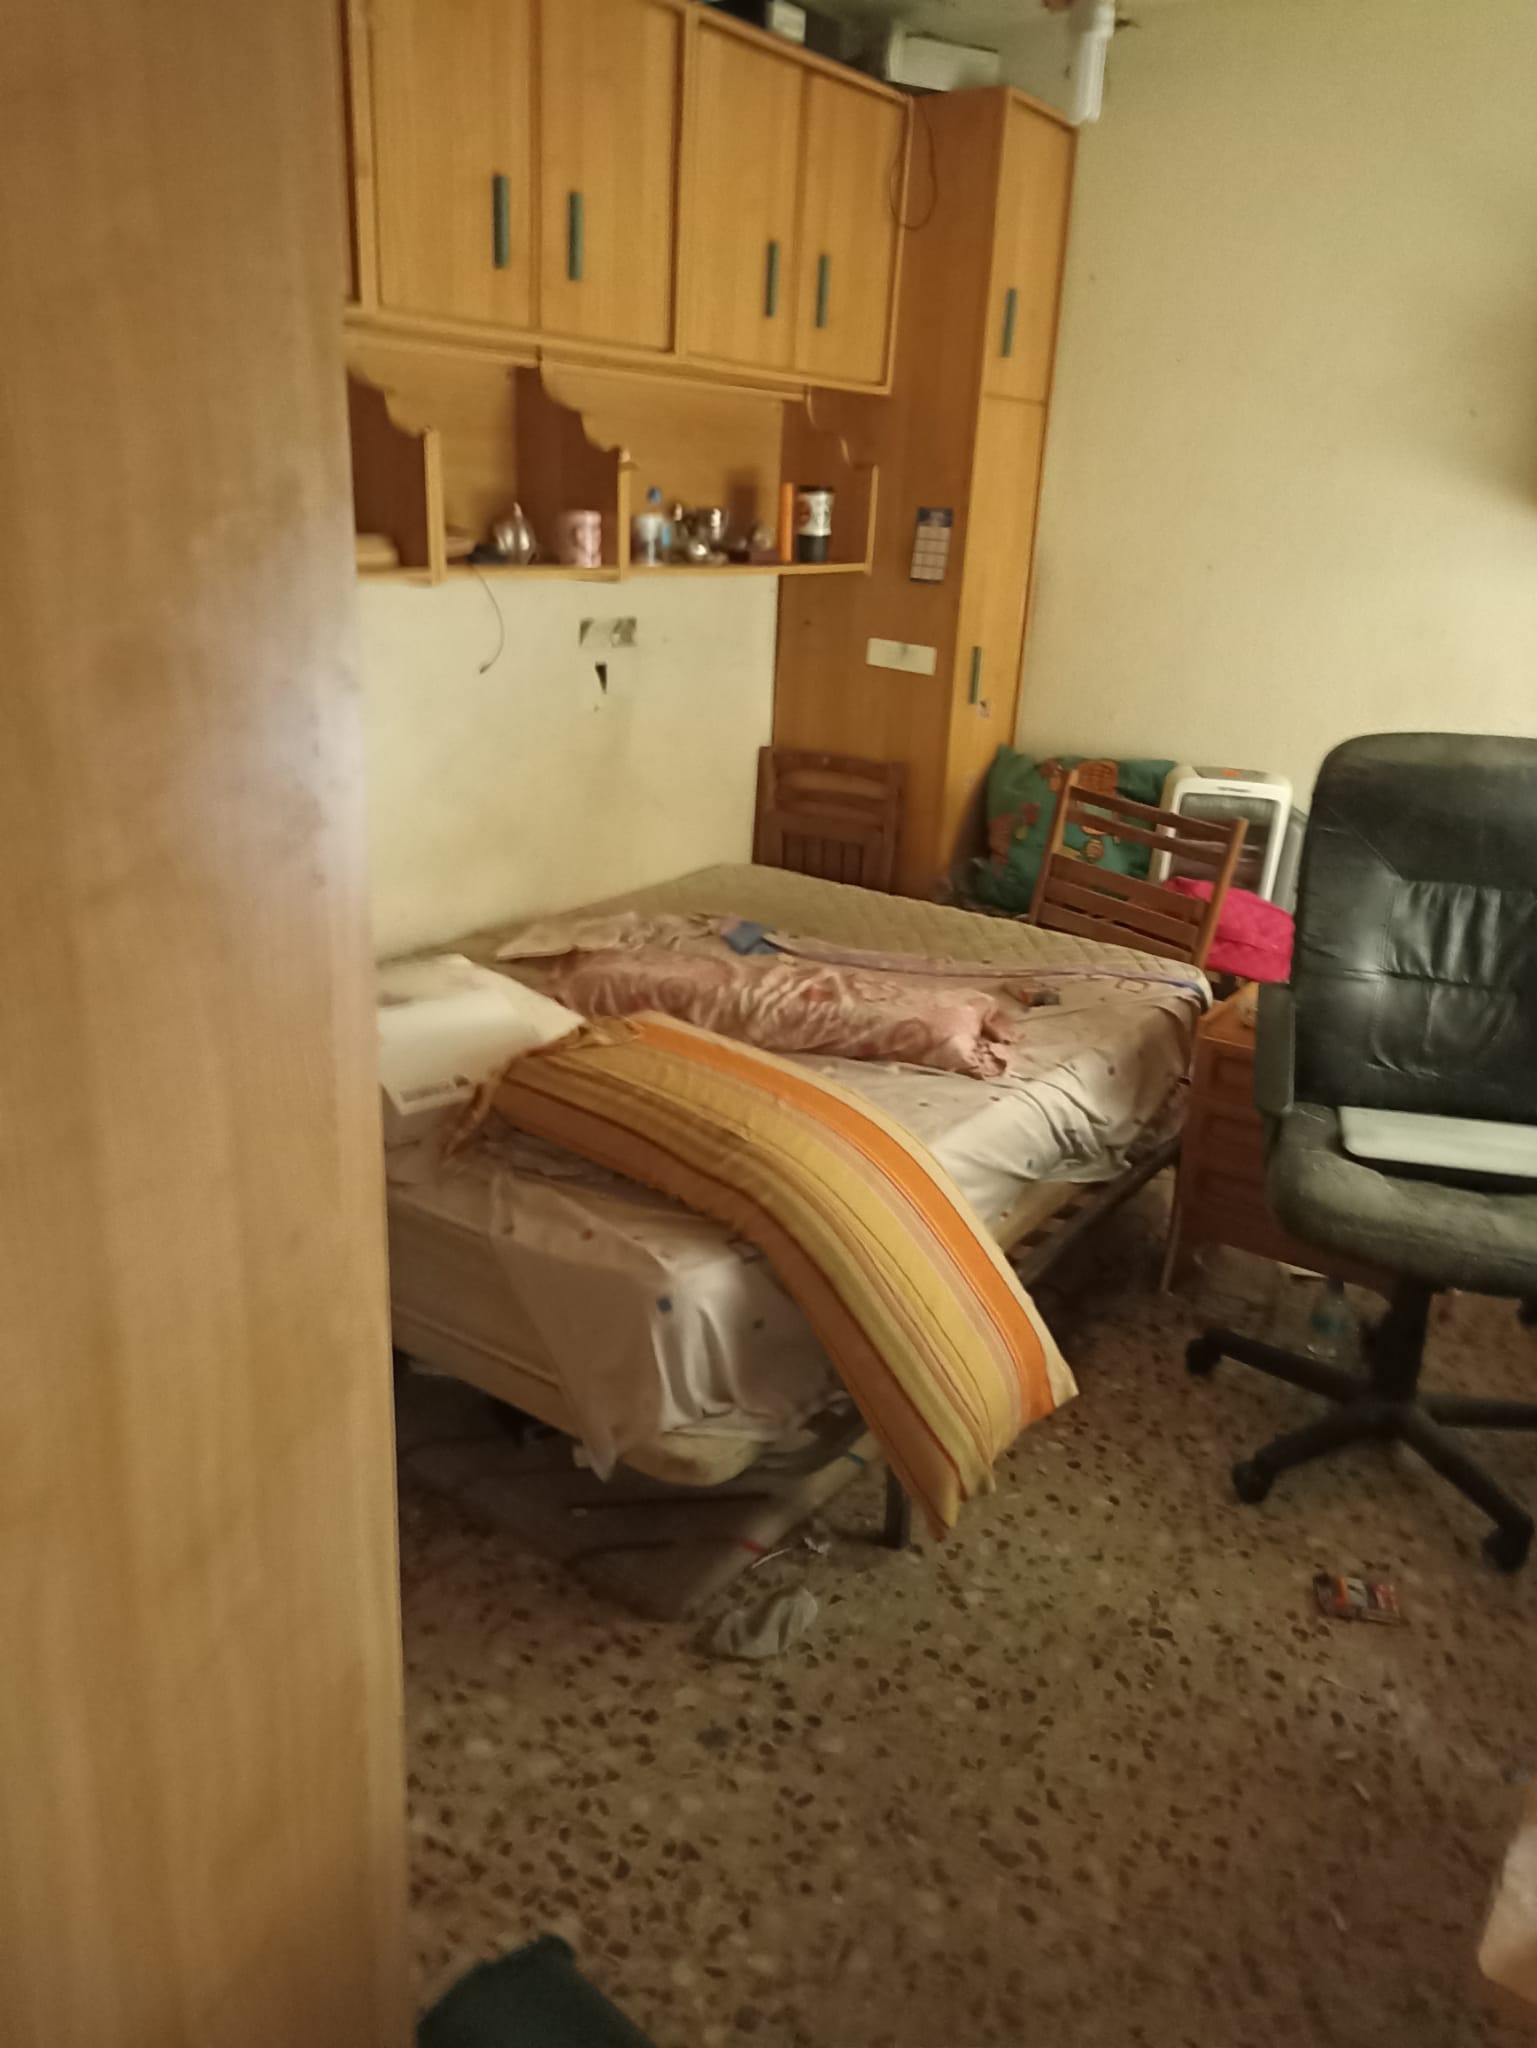 Vaciado de pisos en Tivenys: Servicio profesional	